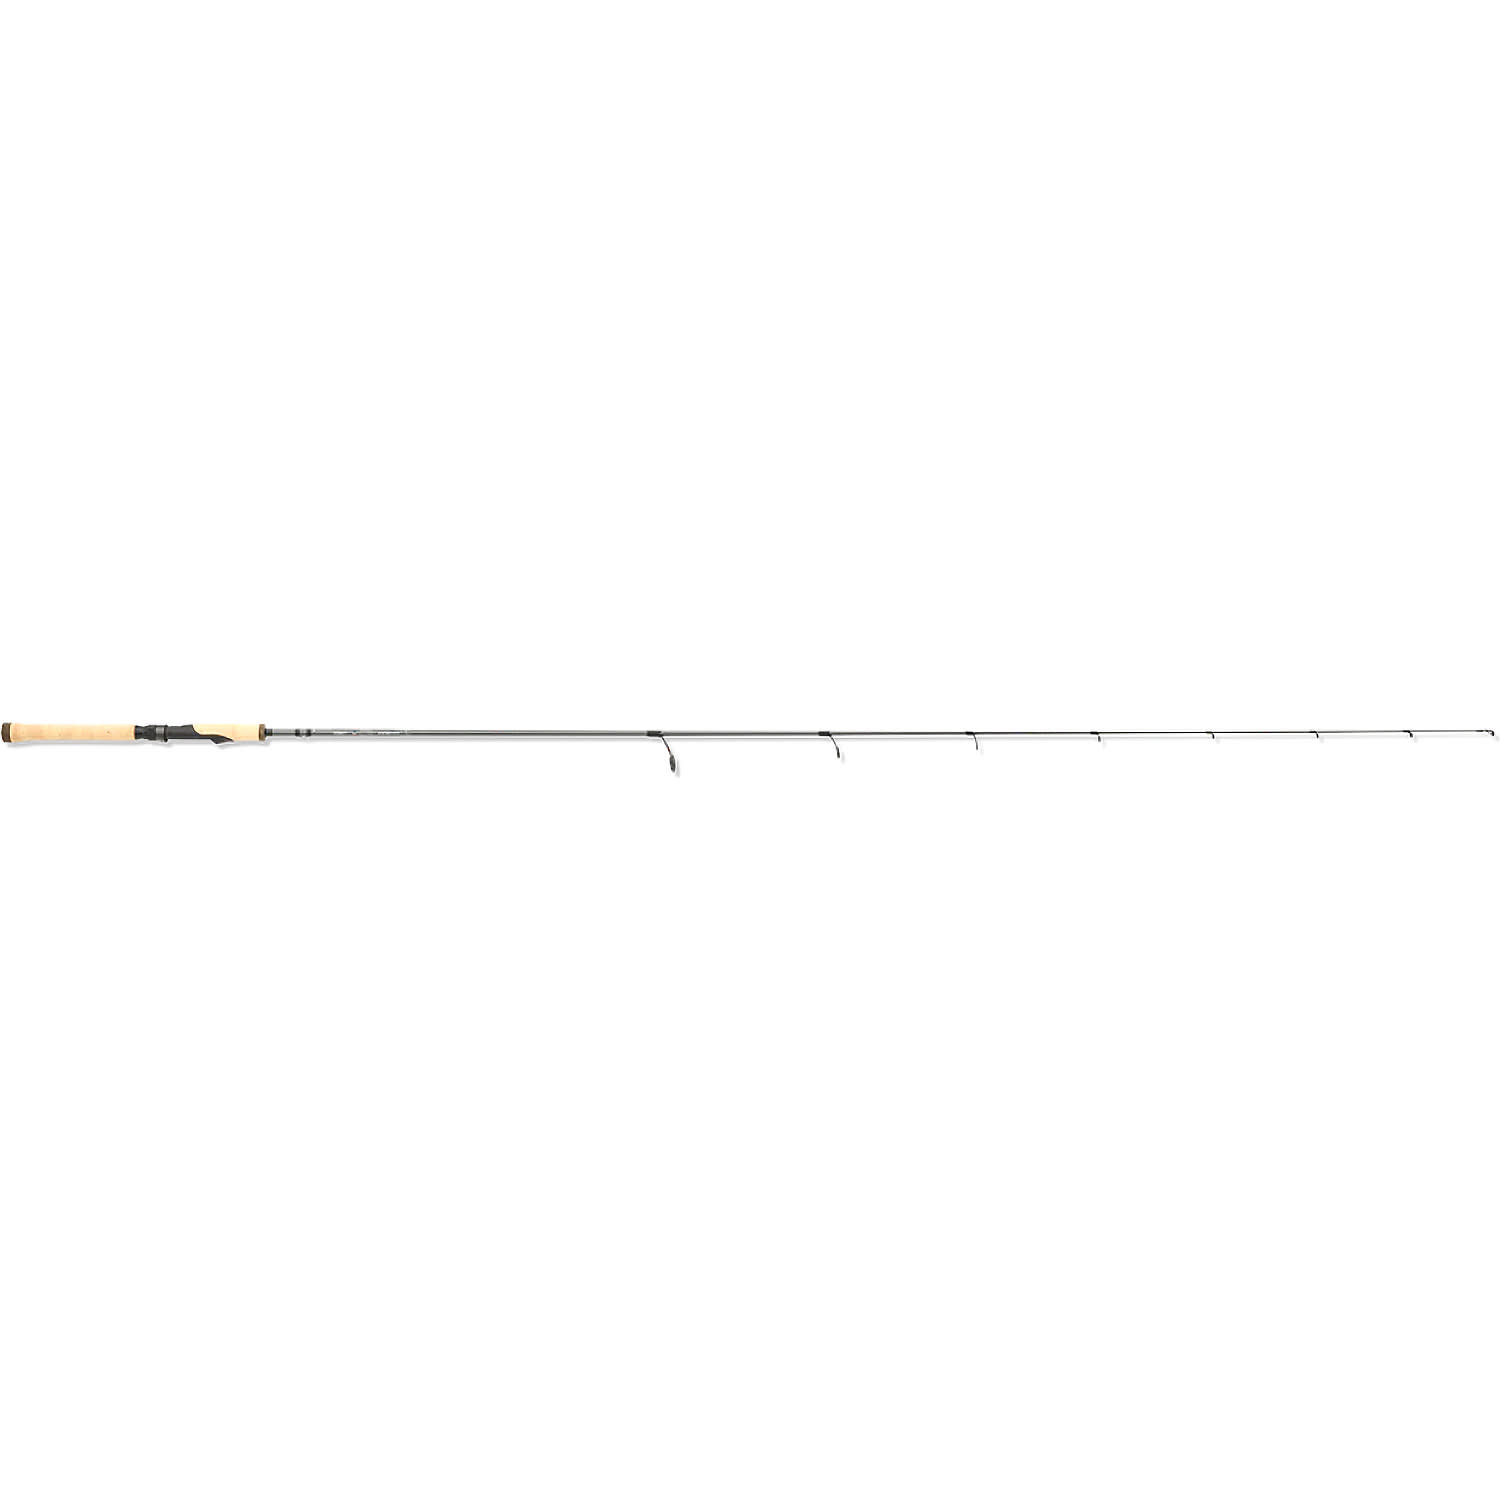 St. Croix® Avid Spinning Rod